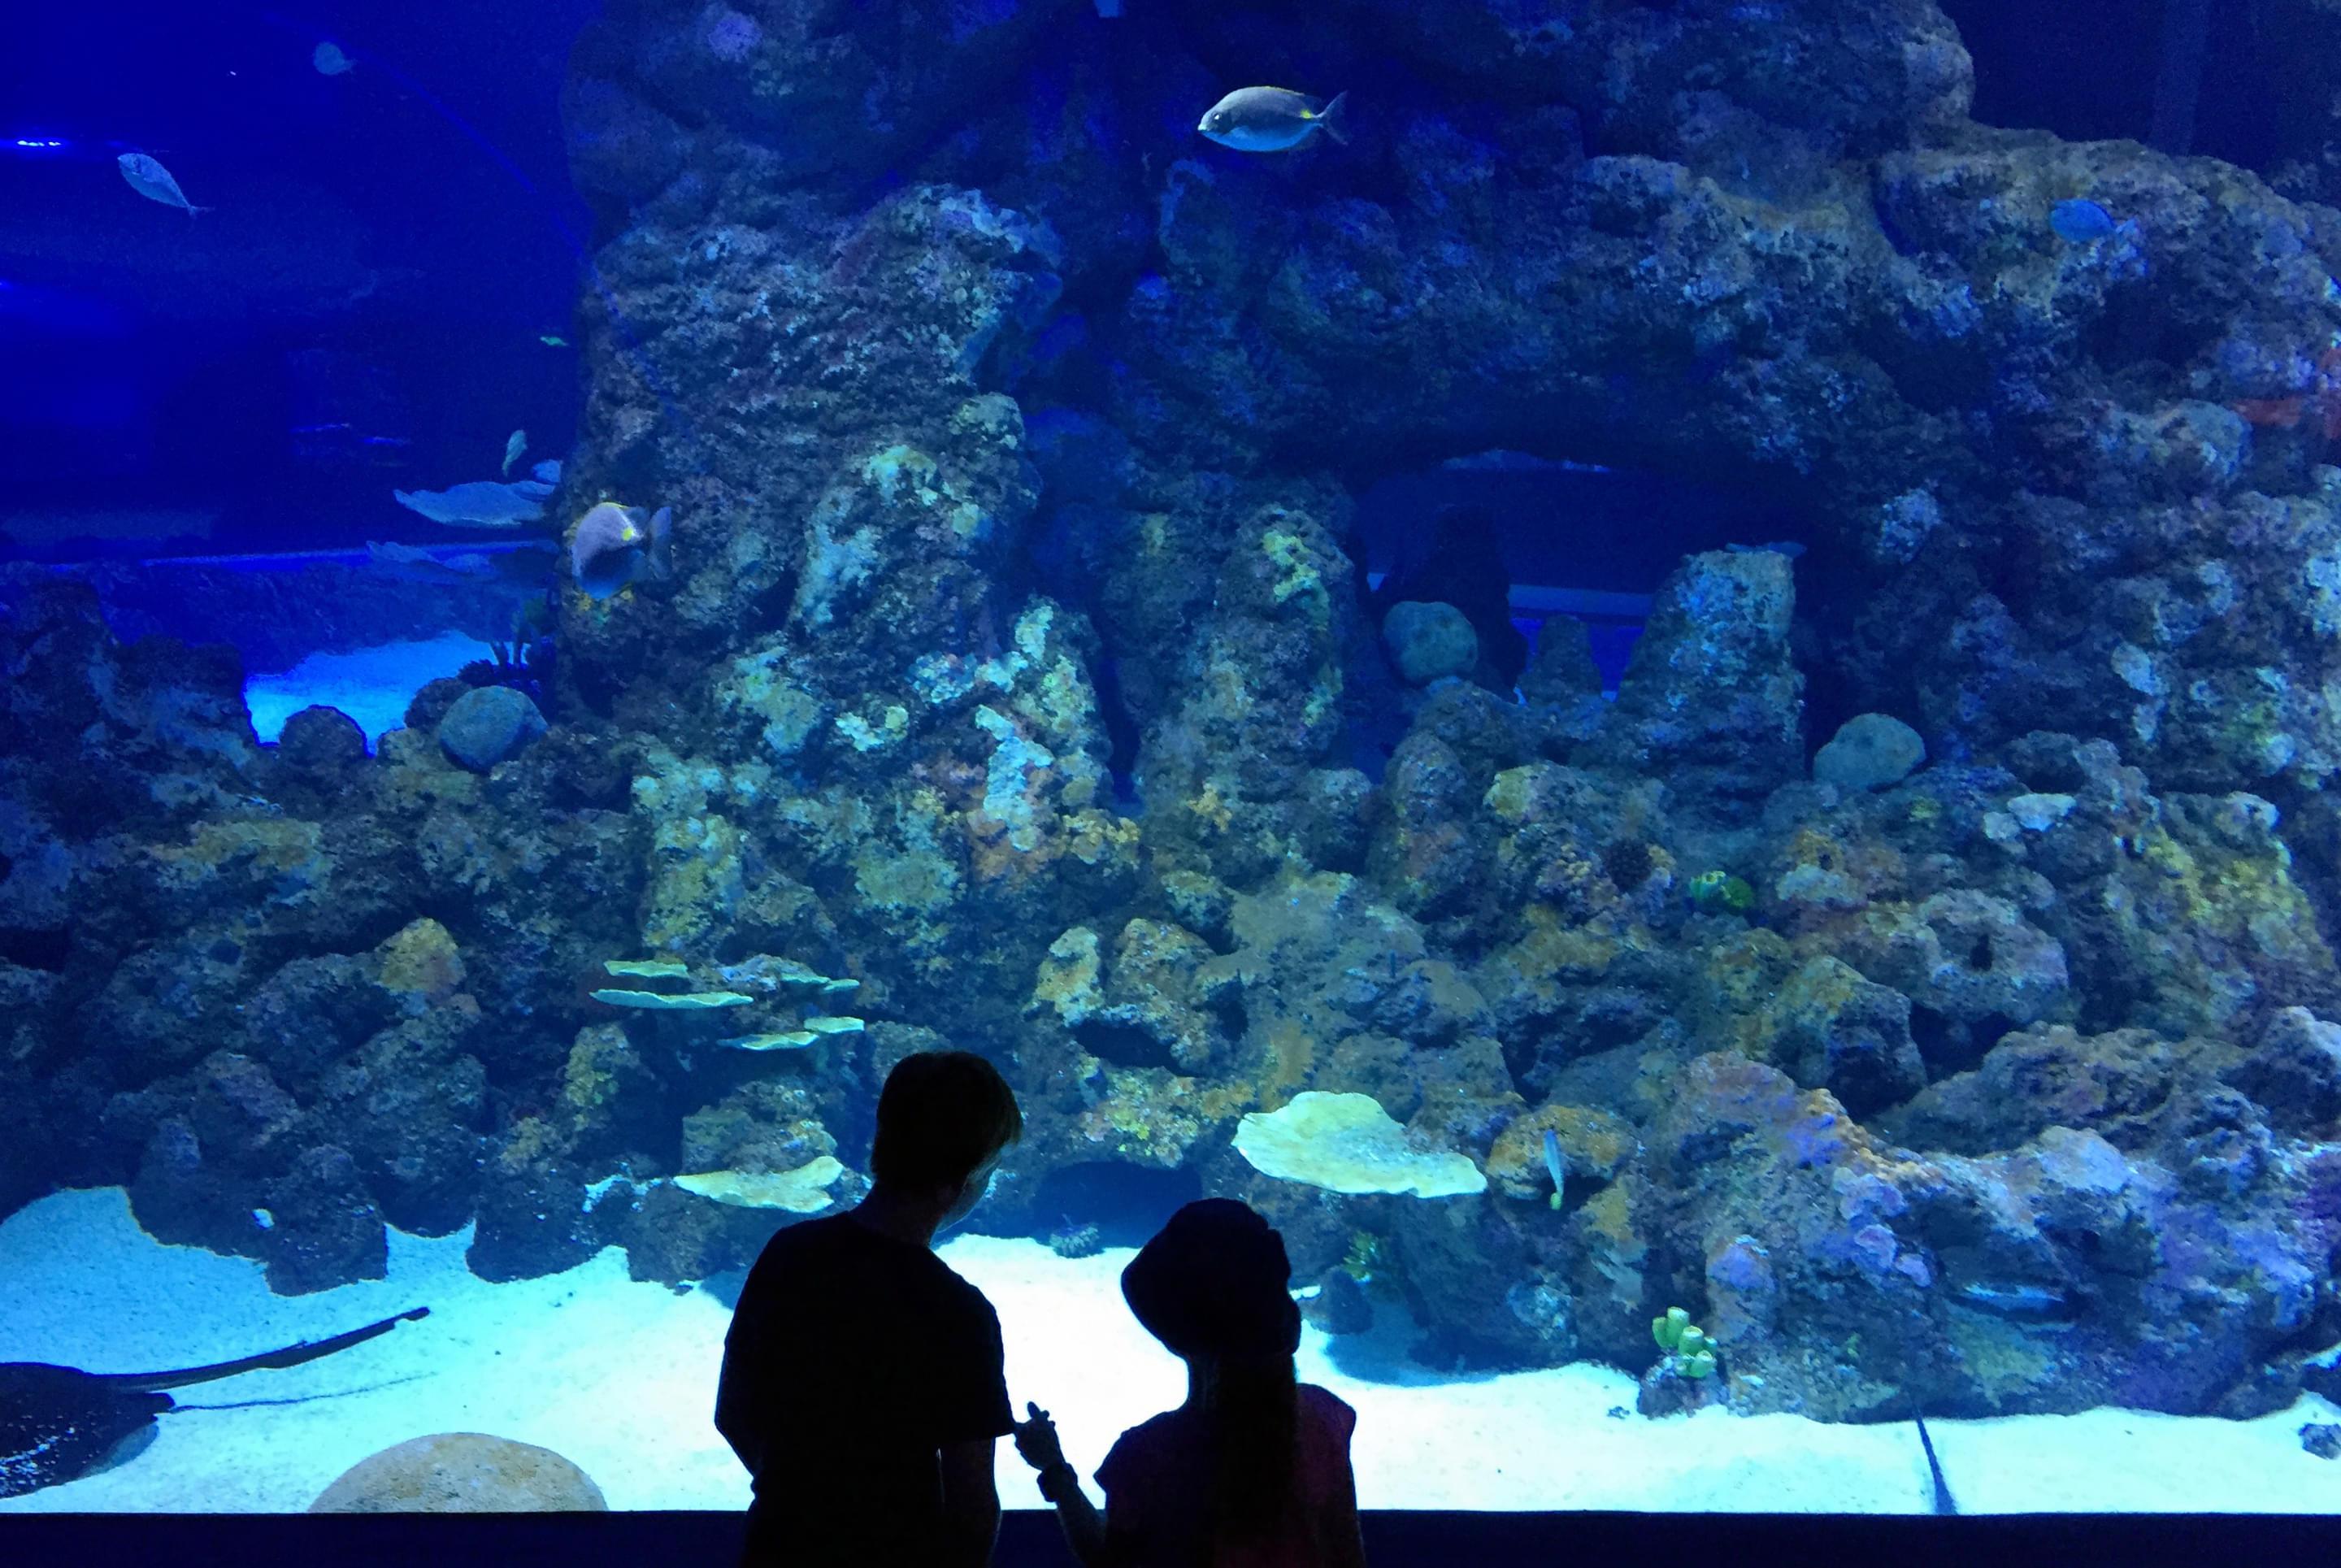 Cairns Aquarium Overview